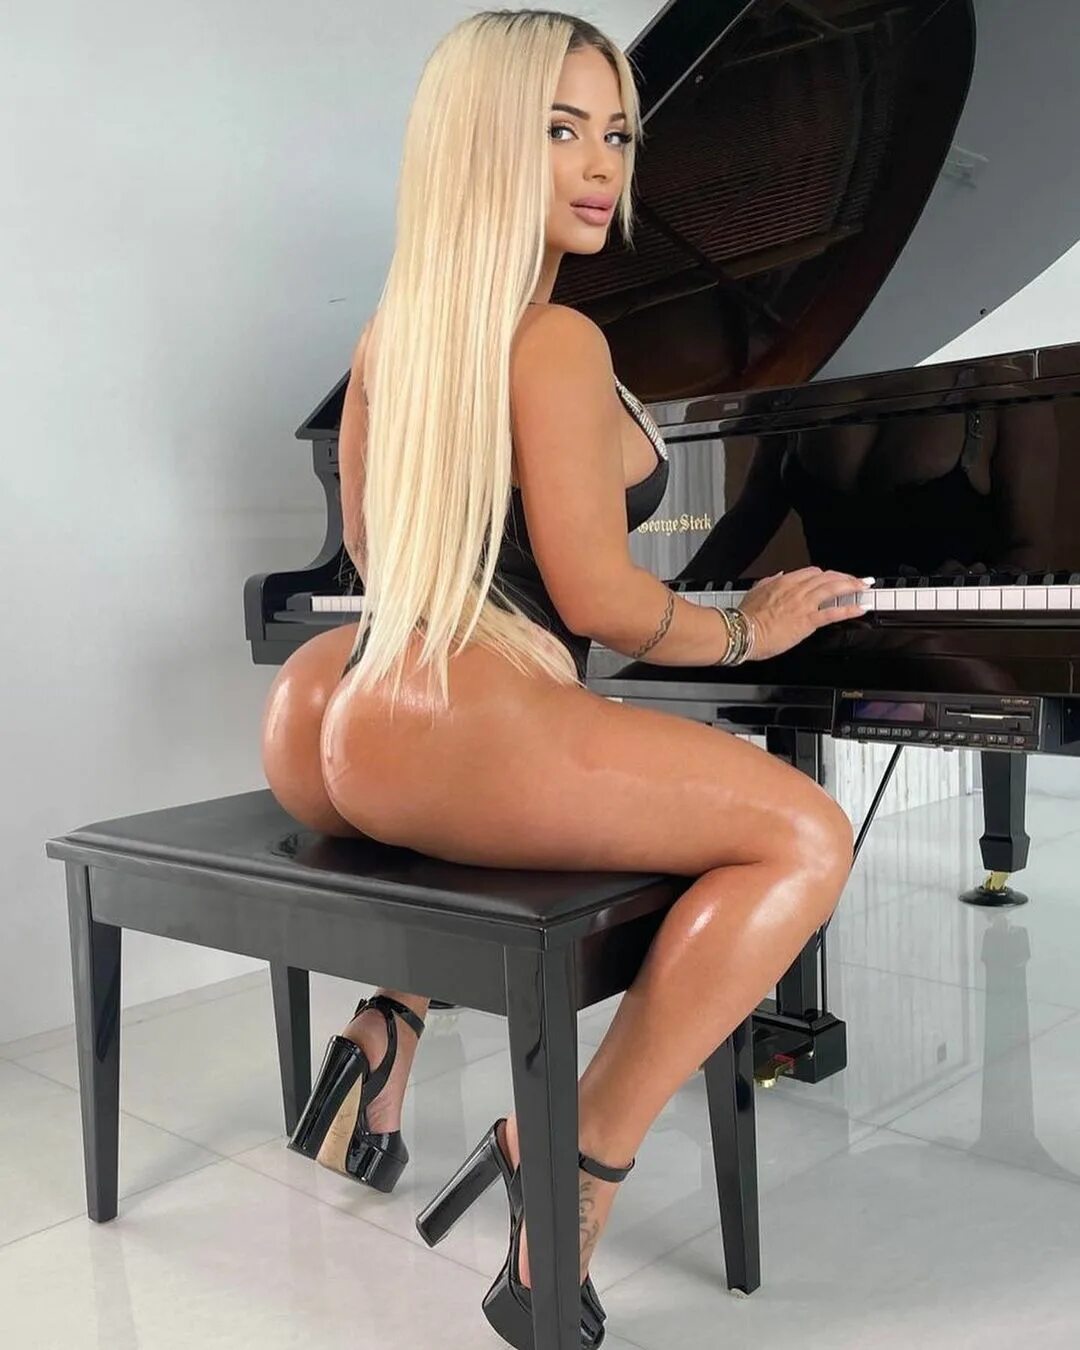 Mia Rivero ميا ريڤيرو الله خير on Instagram: "Free piano 🎹 lessons fo...